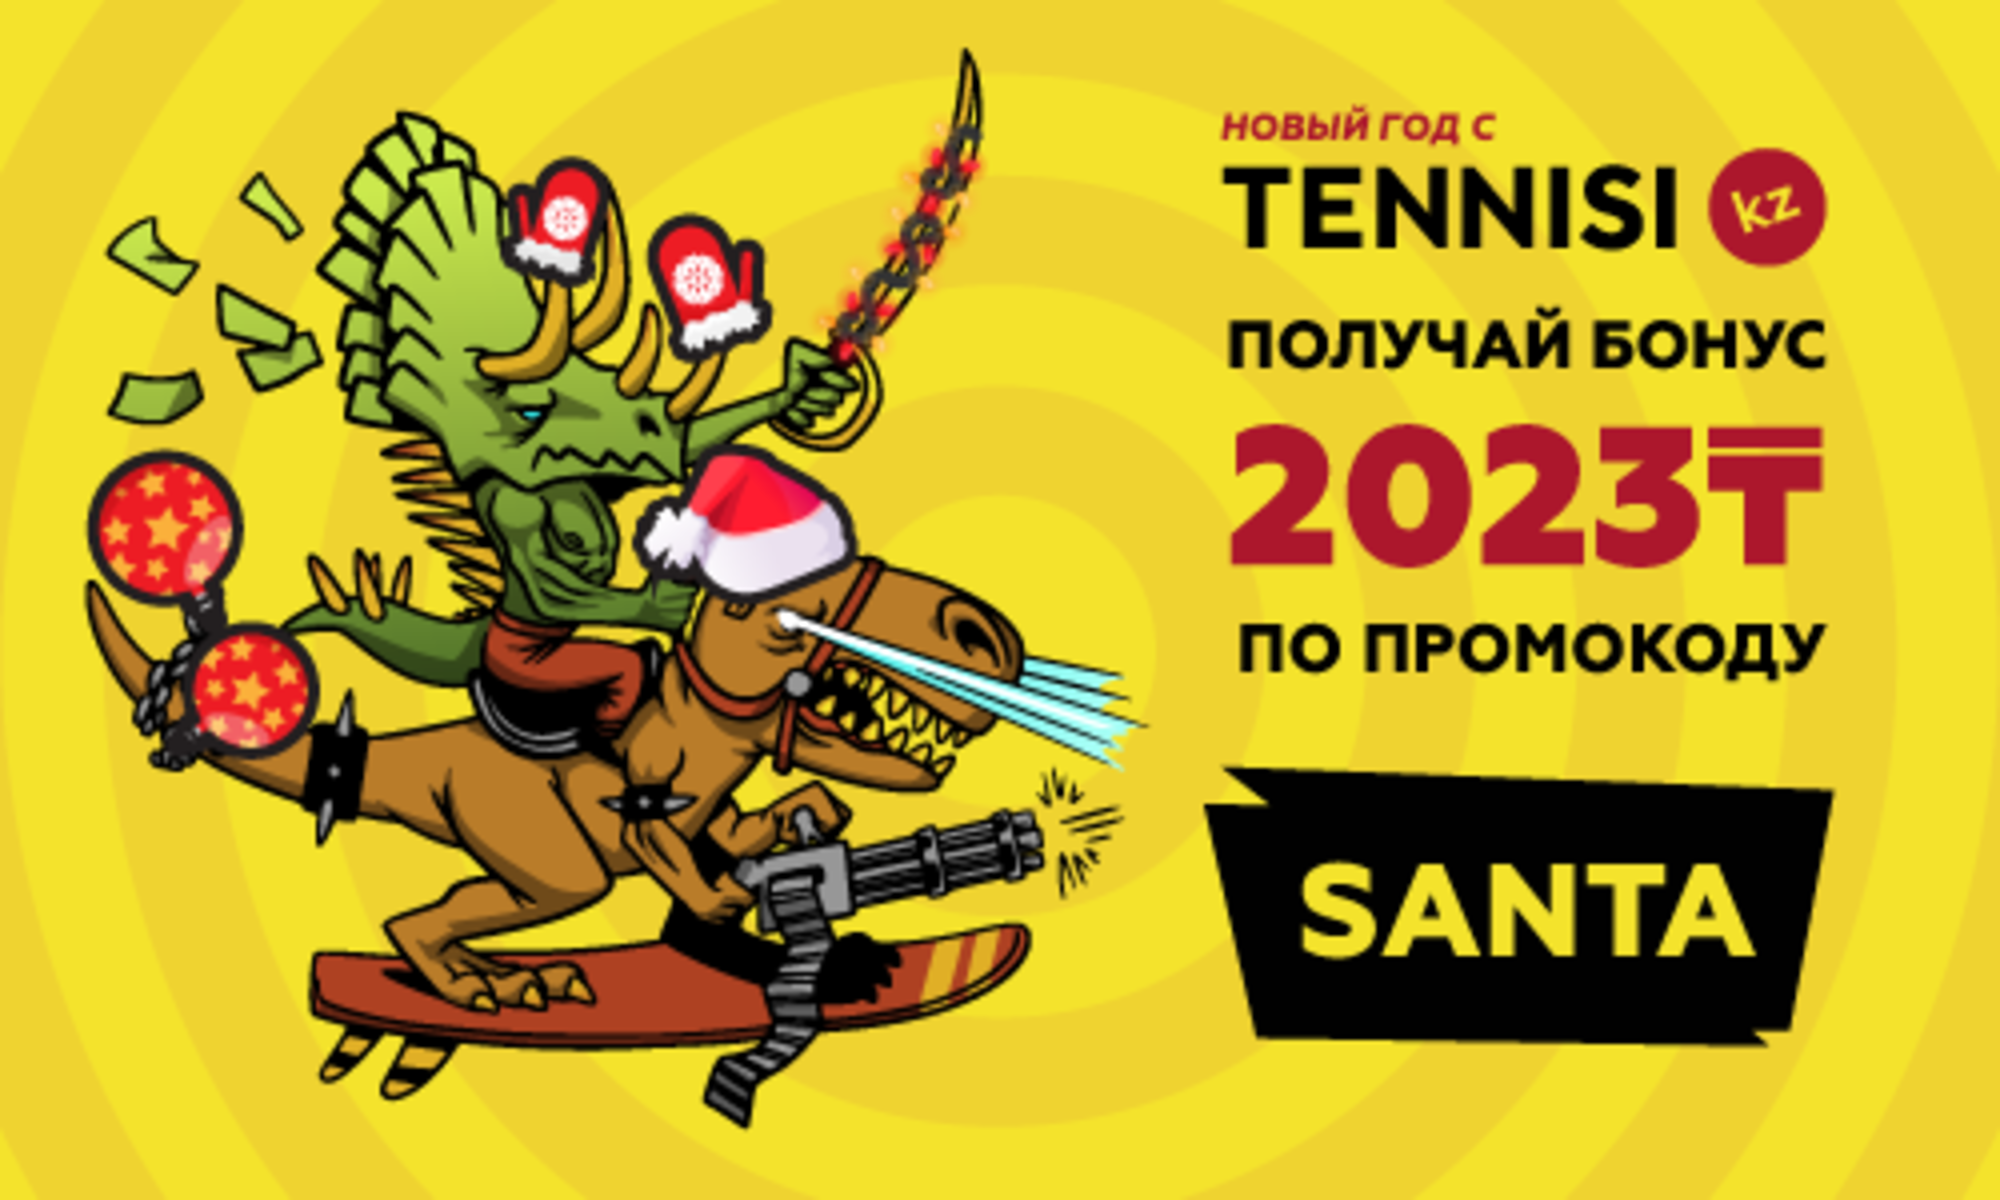 «Тенниси» в Казахастане дарит 2023 тенге по промокоду